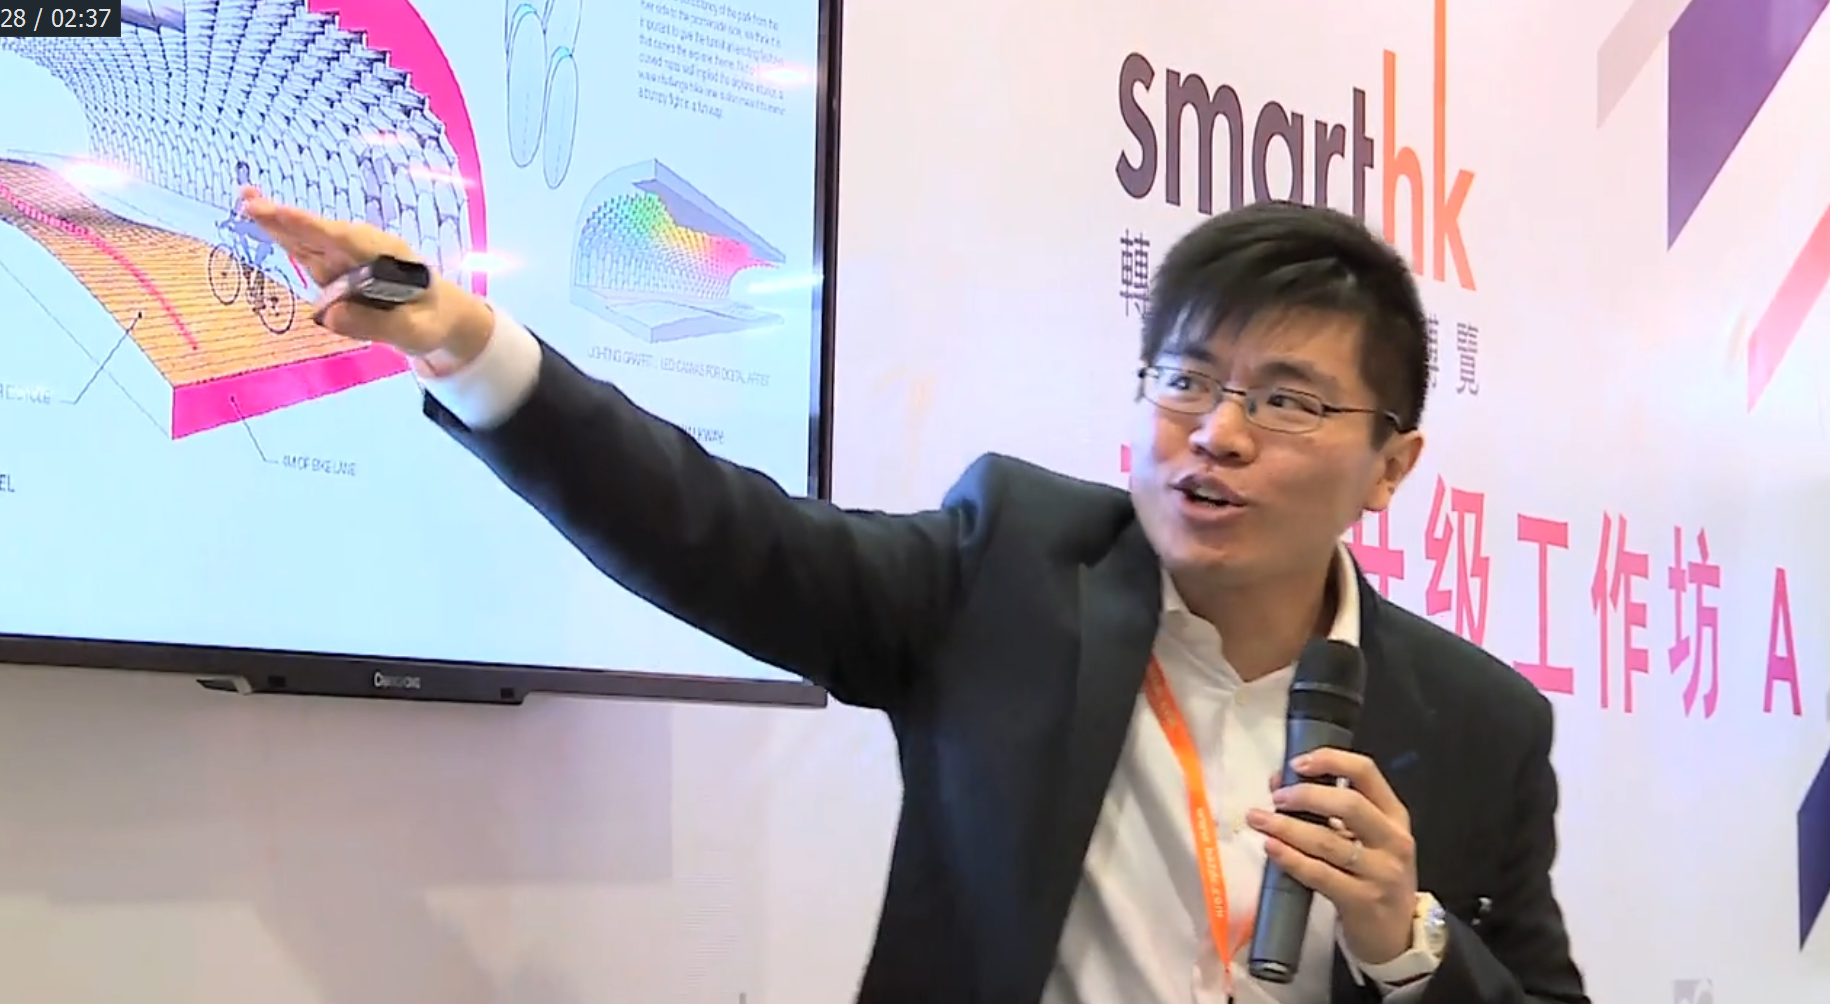 Presentation in Smarthk, Jinan